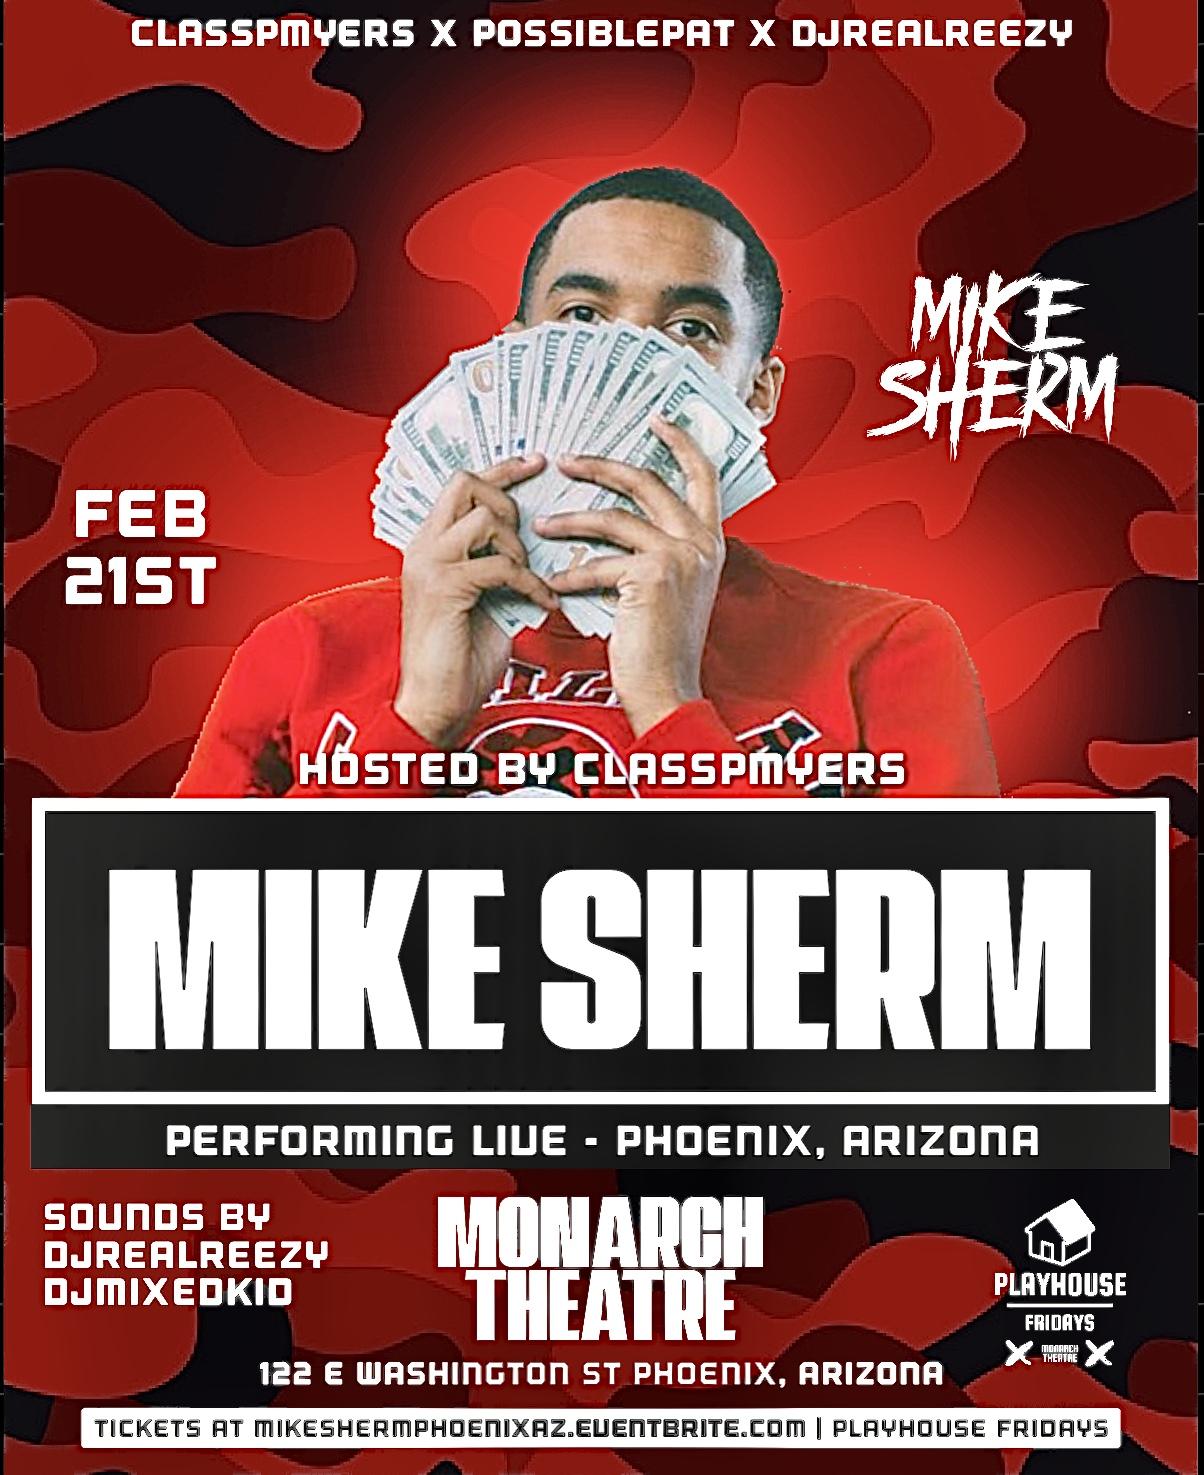 Mike Sherm x Phoenix | Playhouse Fridays